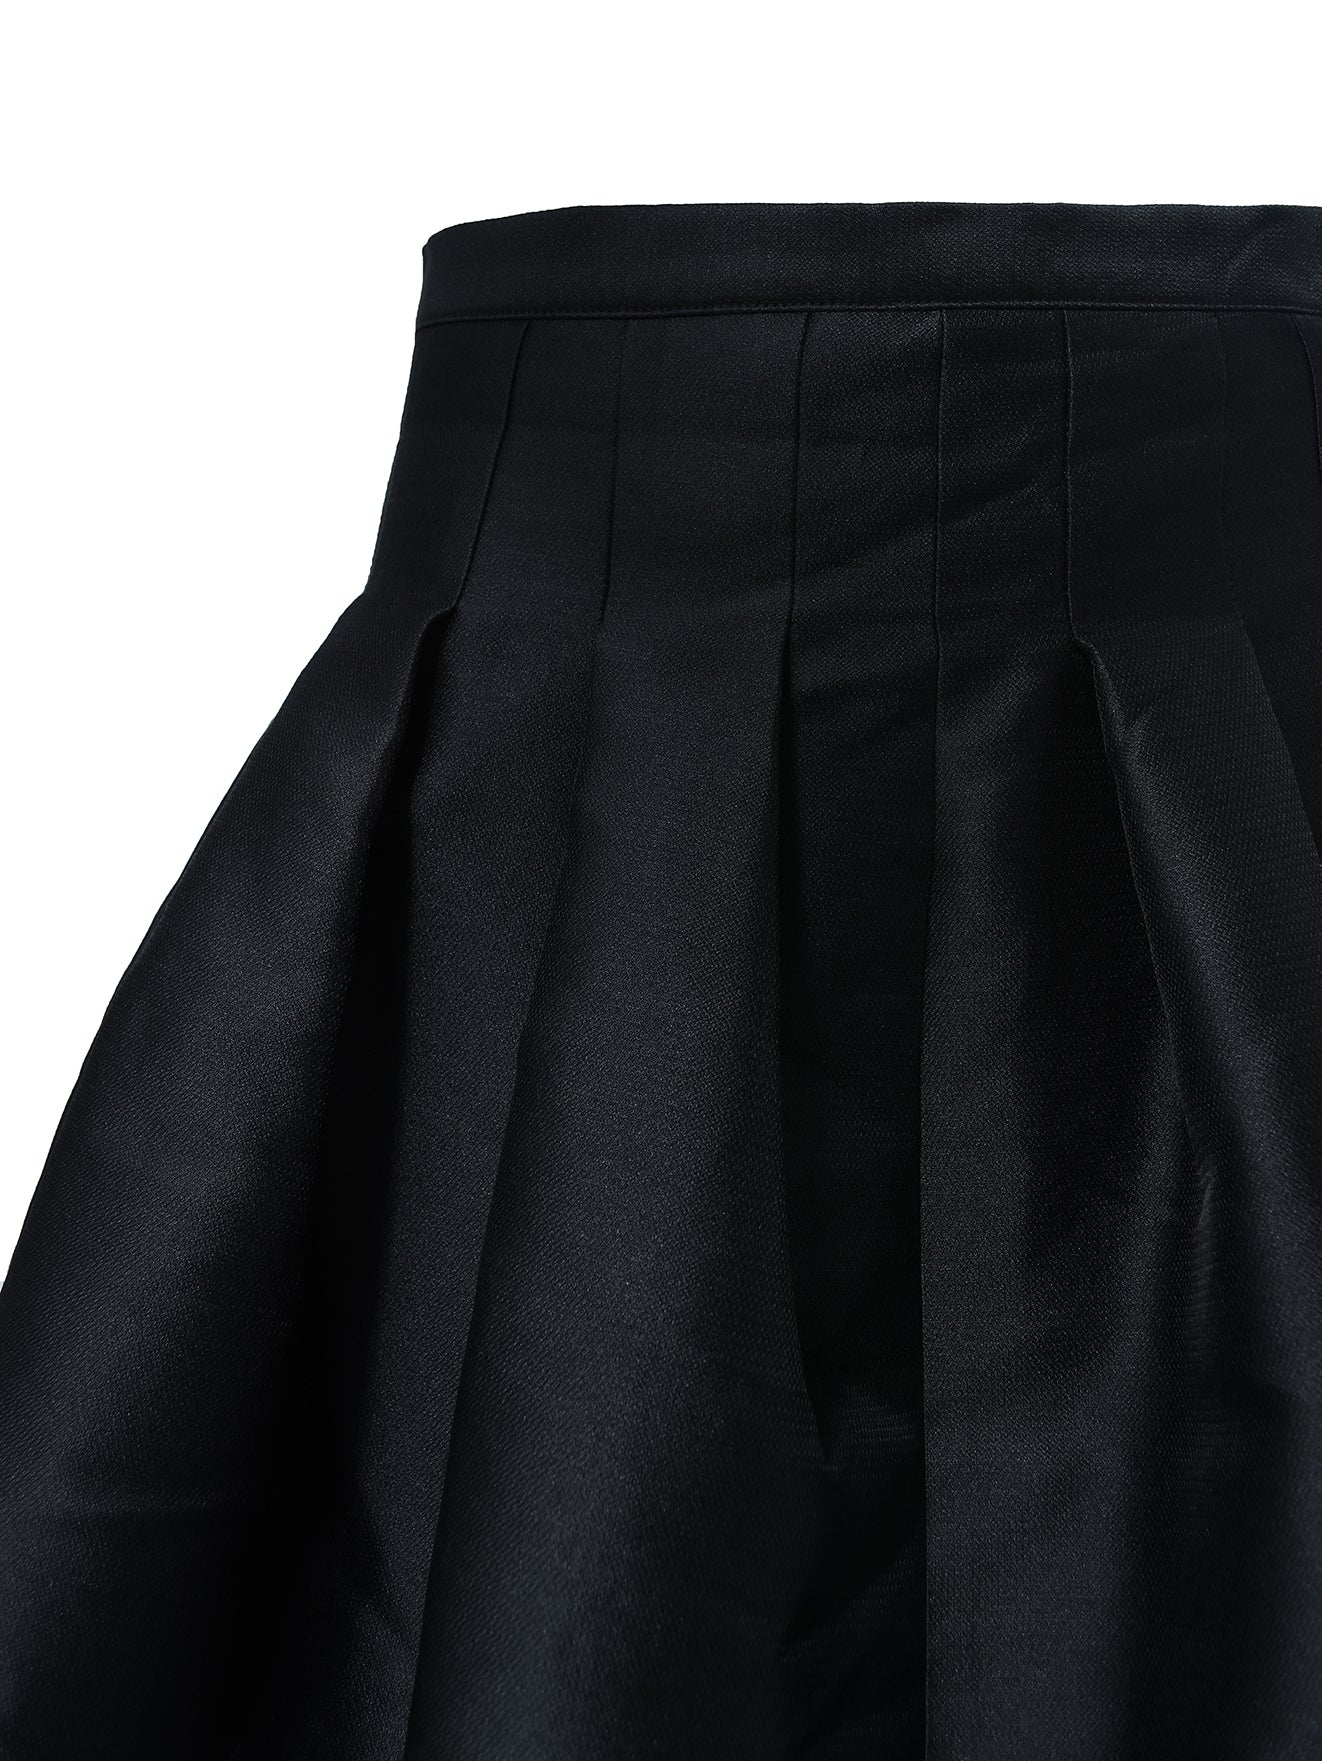 Black High Waist Box Pleated Short Bell Skirt